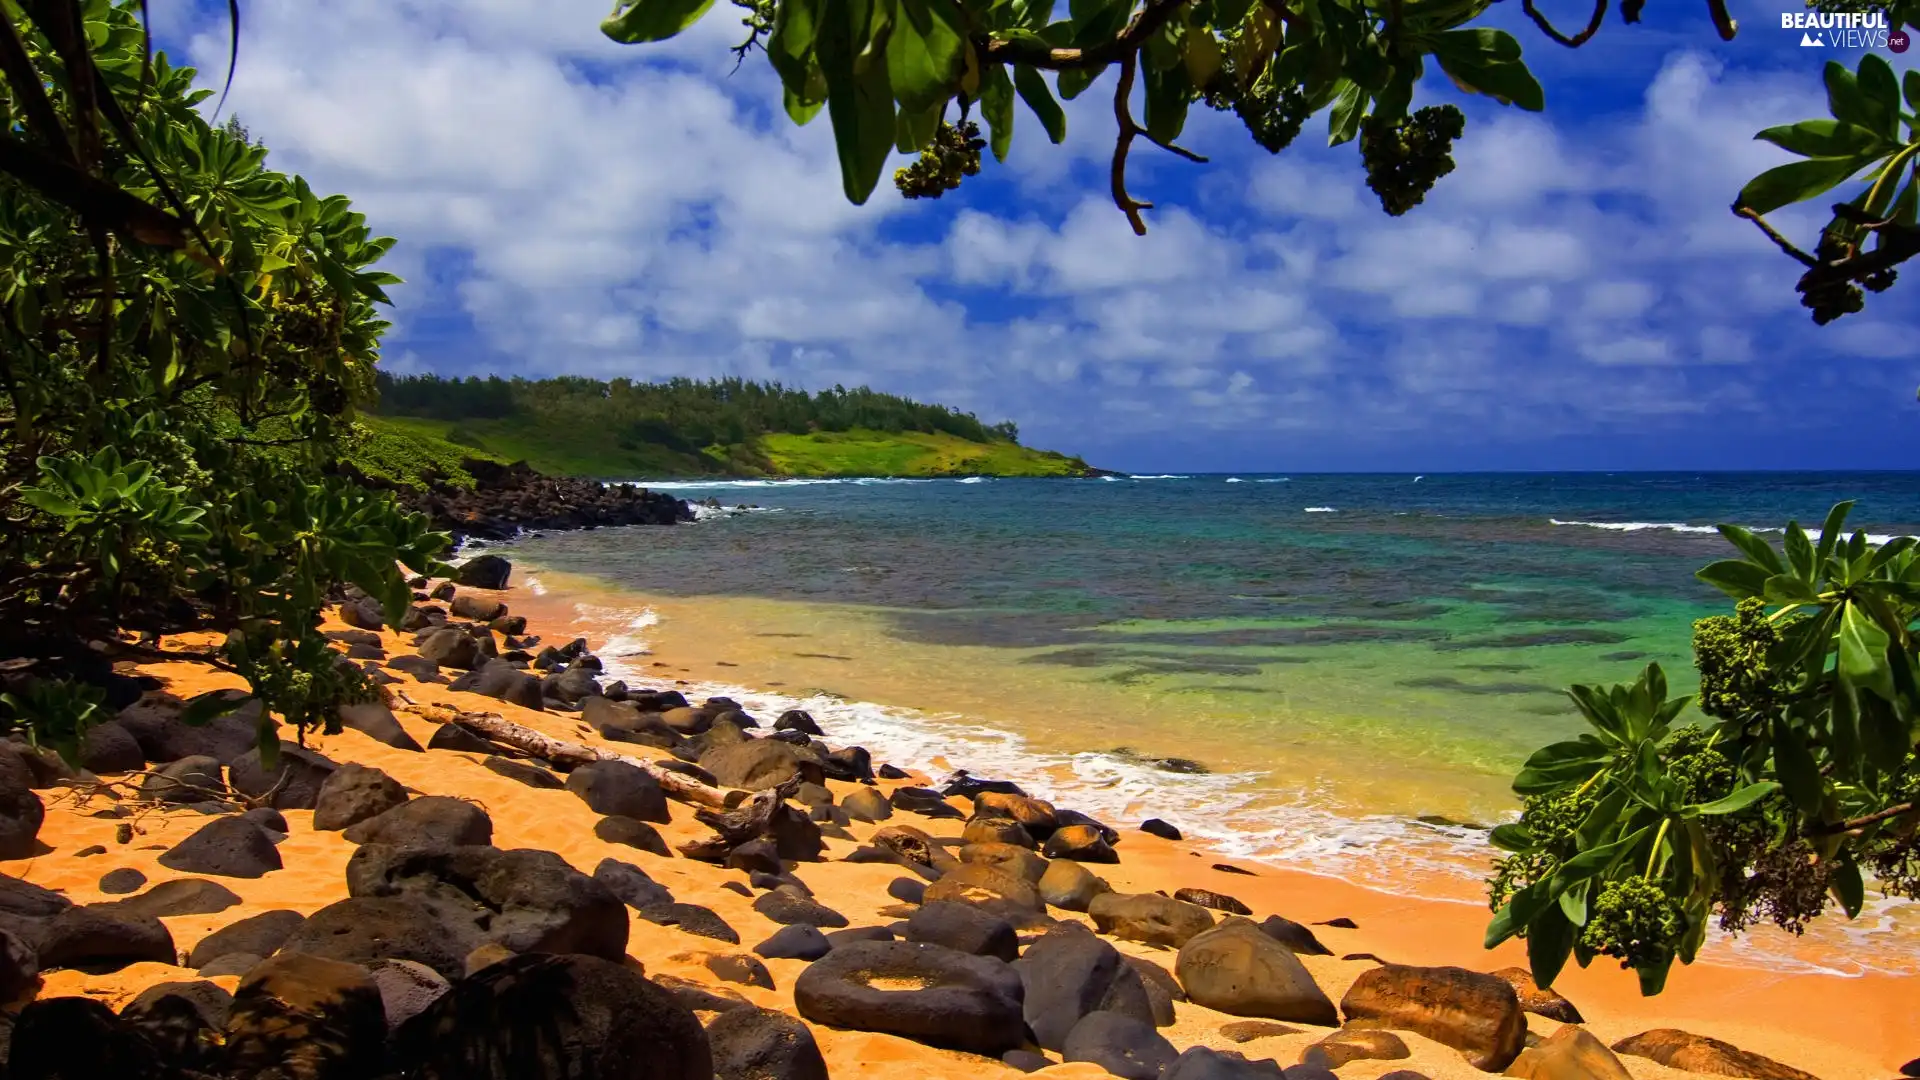 Aloha State Hawaje, sea, Stones